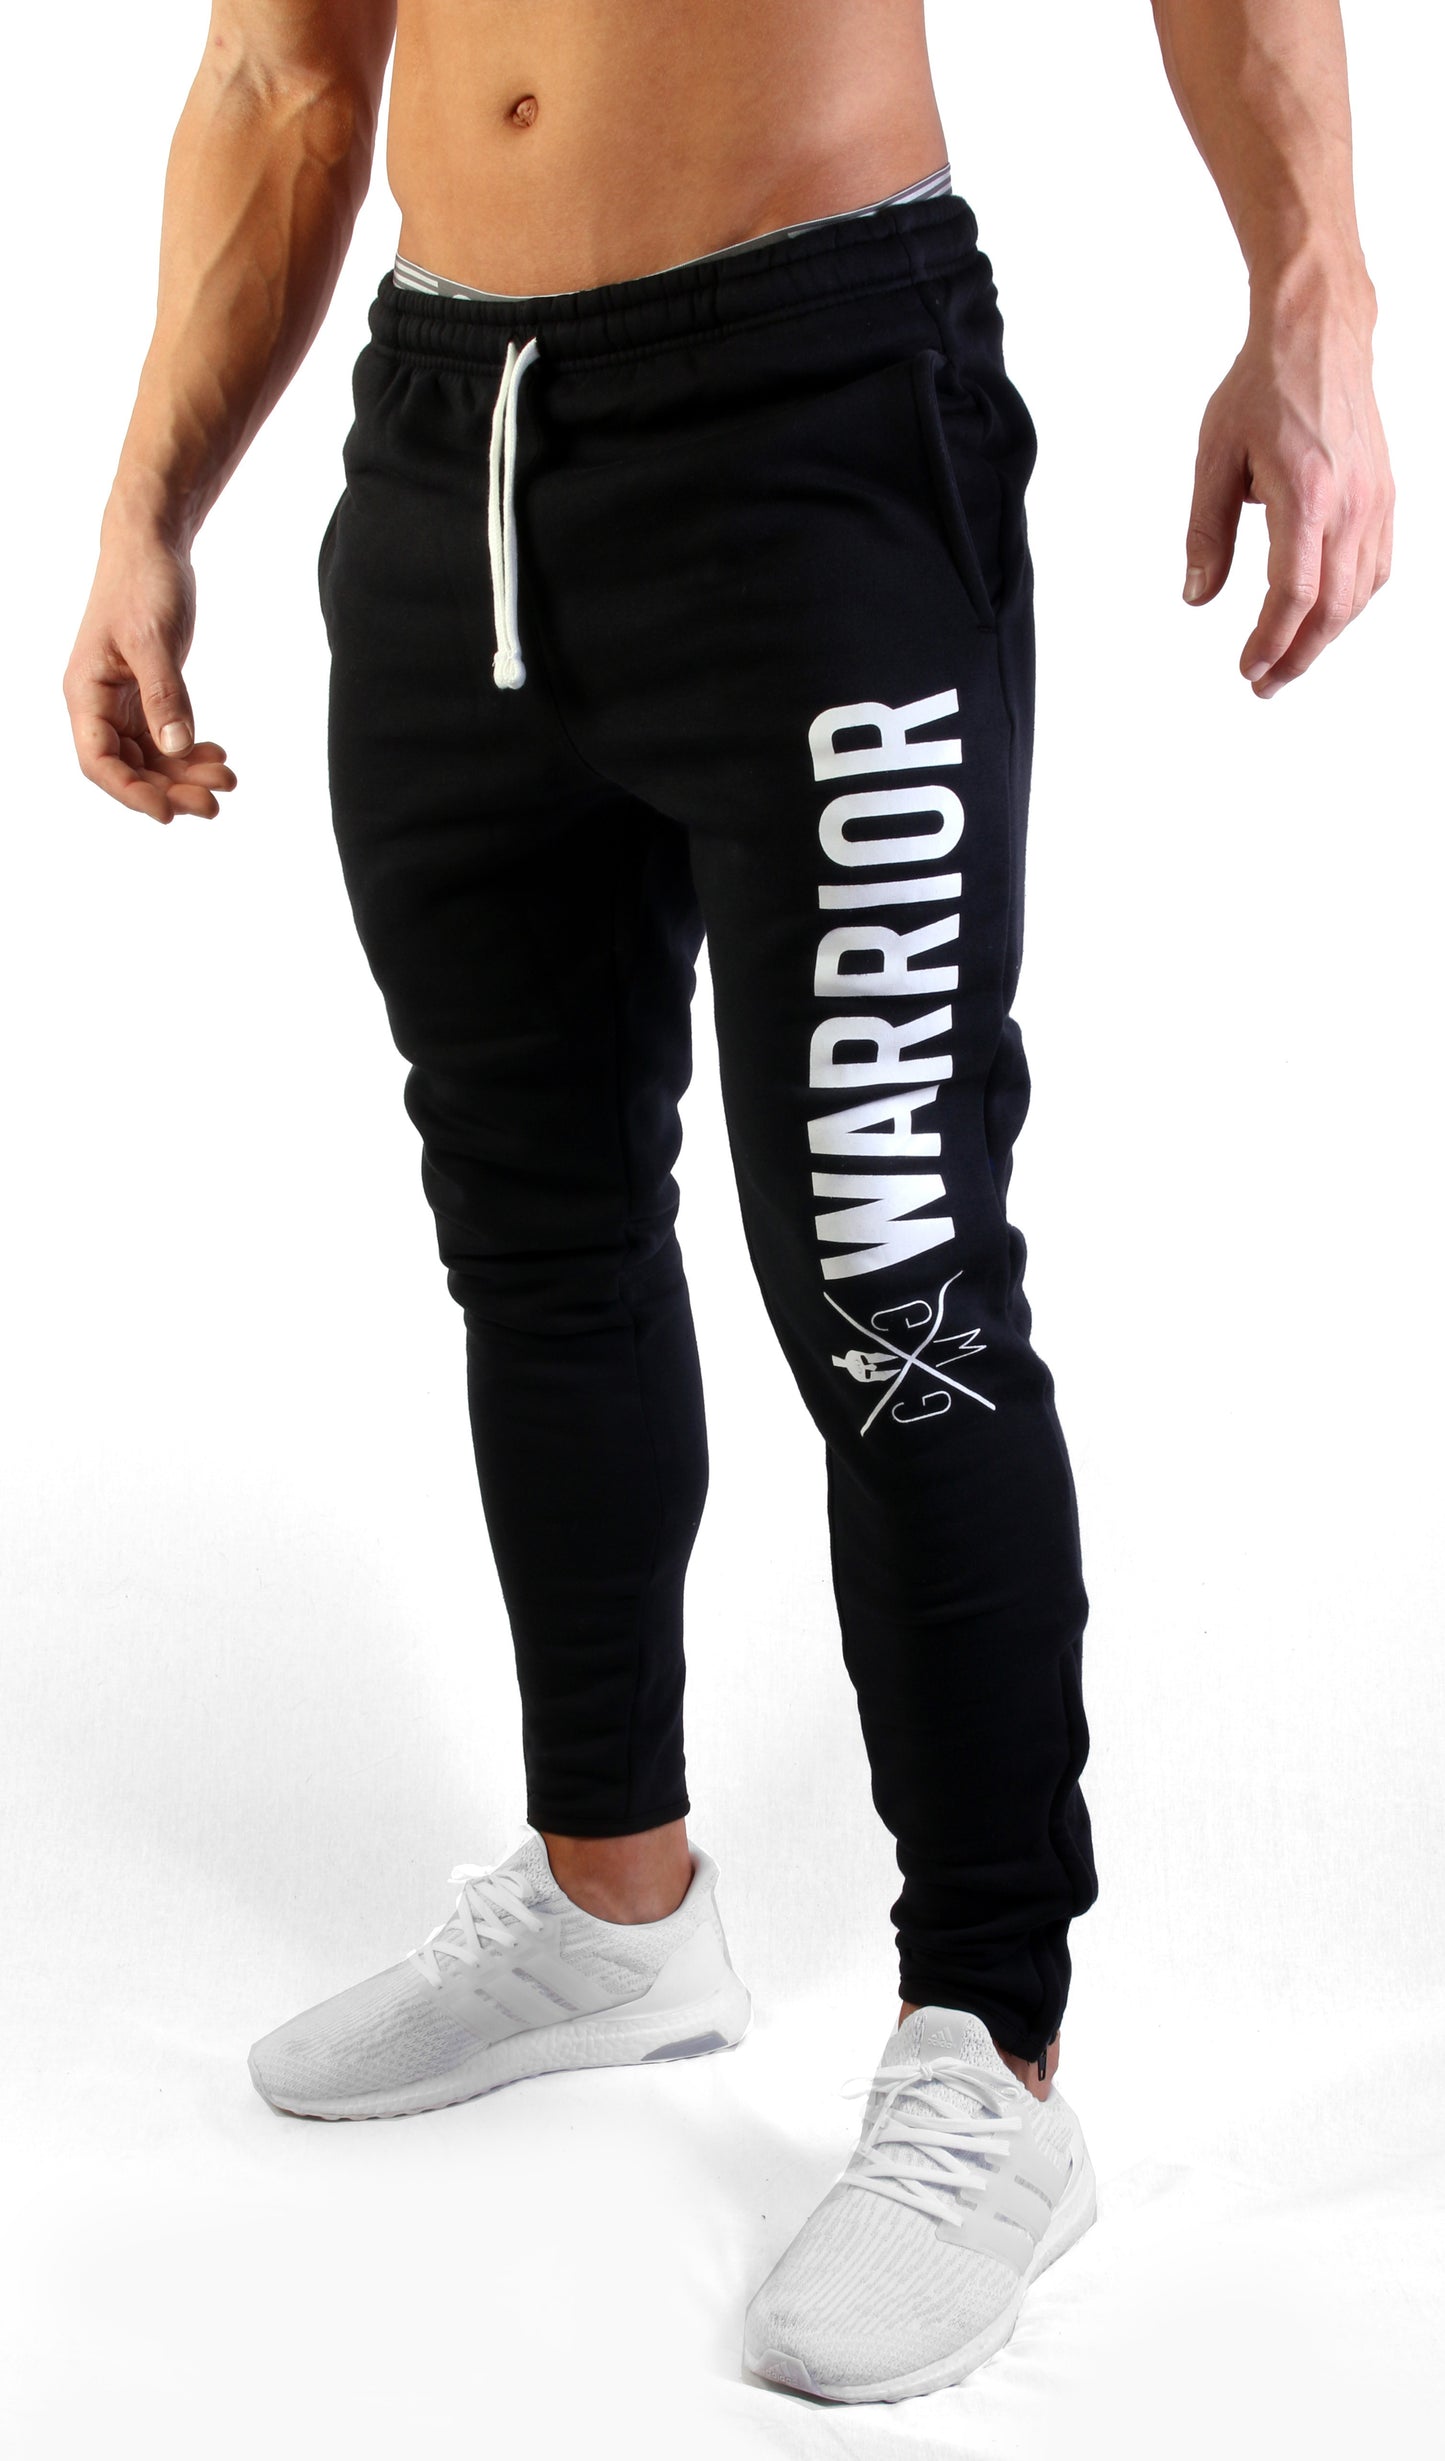 Warrior Pants - Black